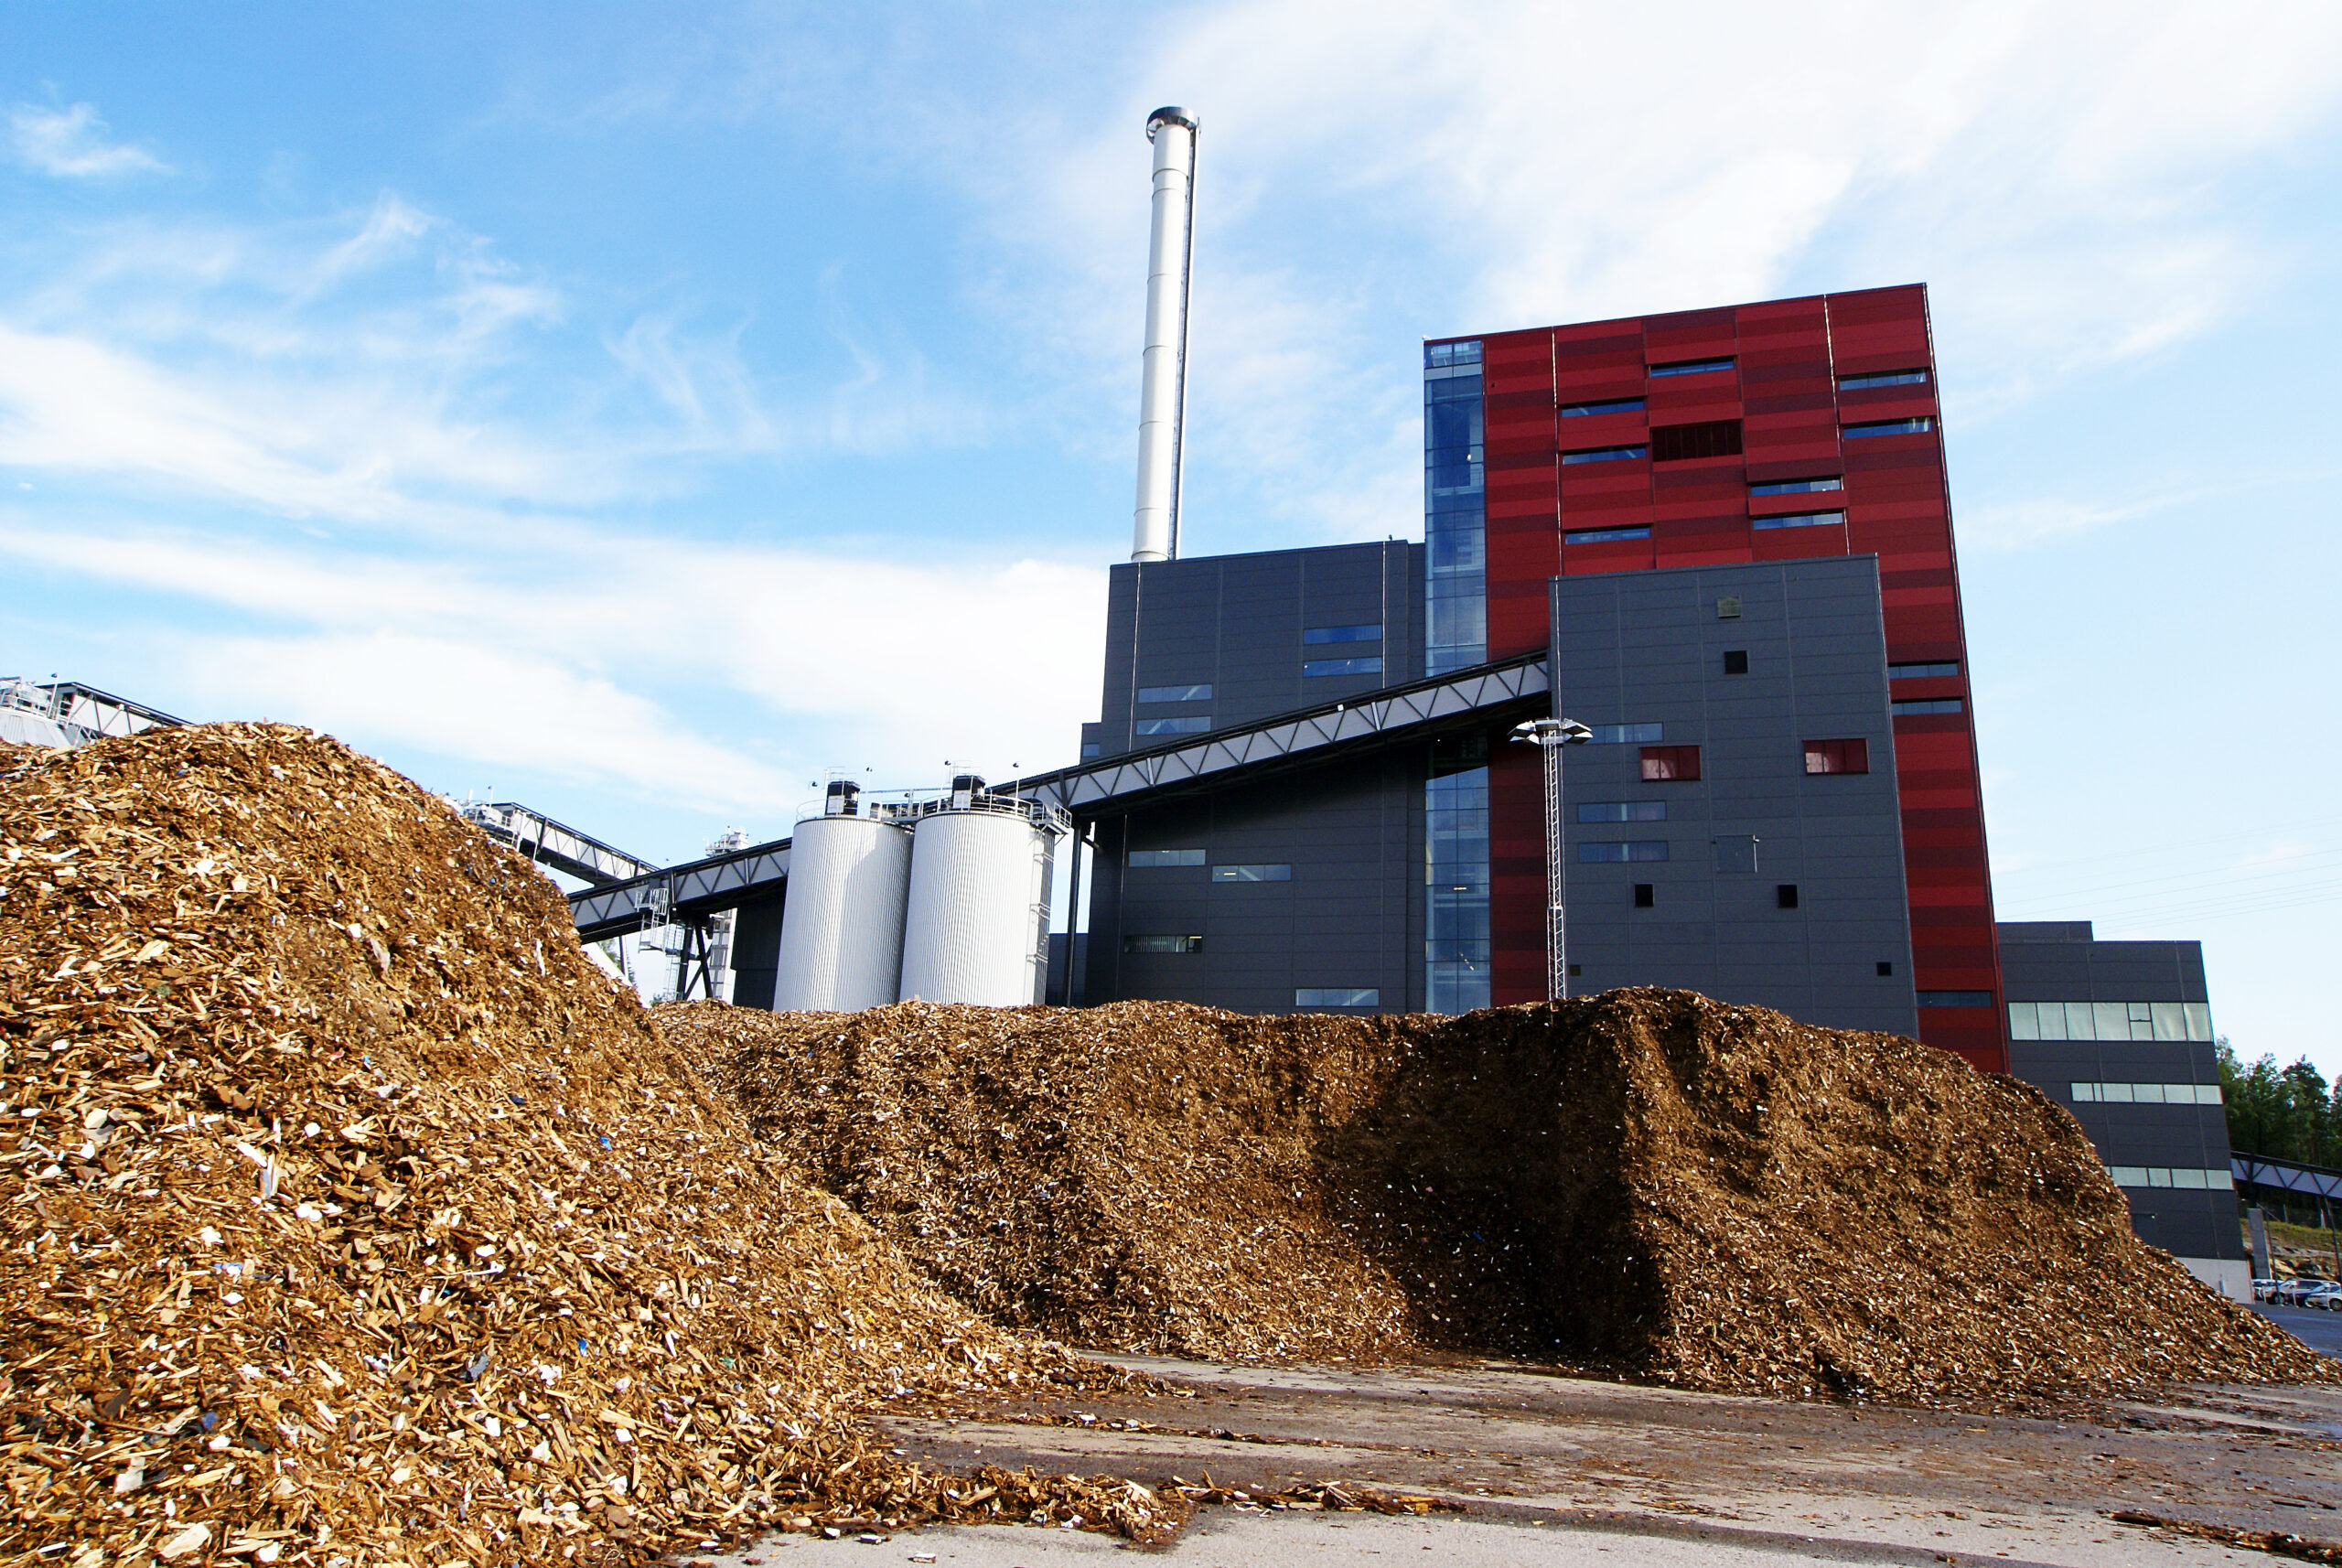 SBP – Sustainable Biomass Program